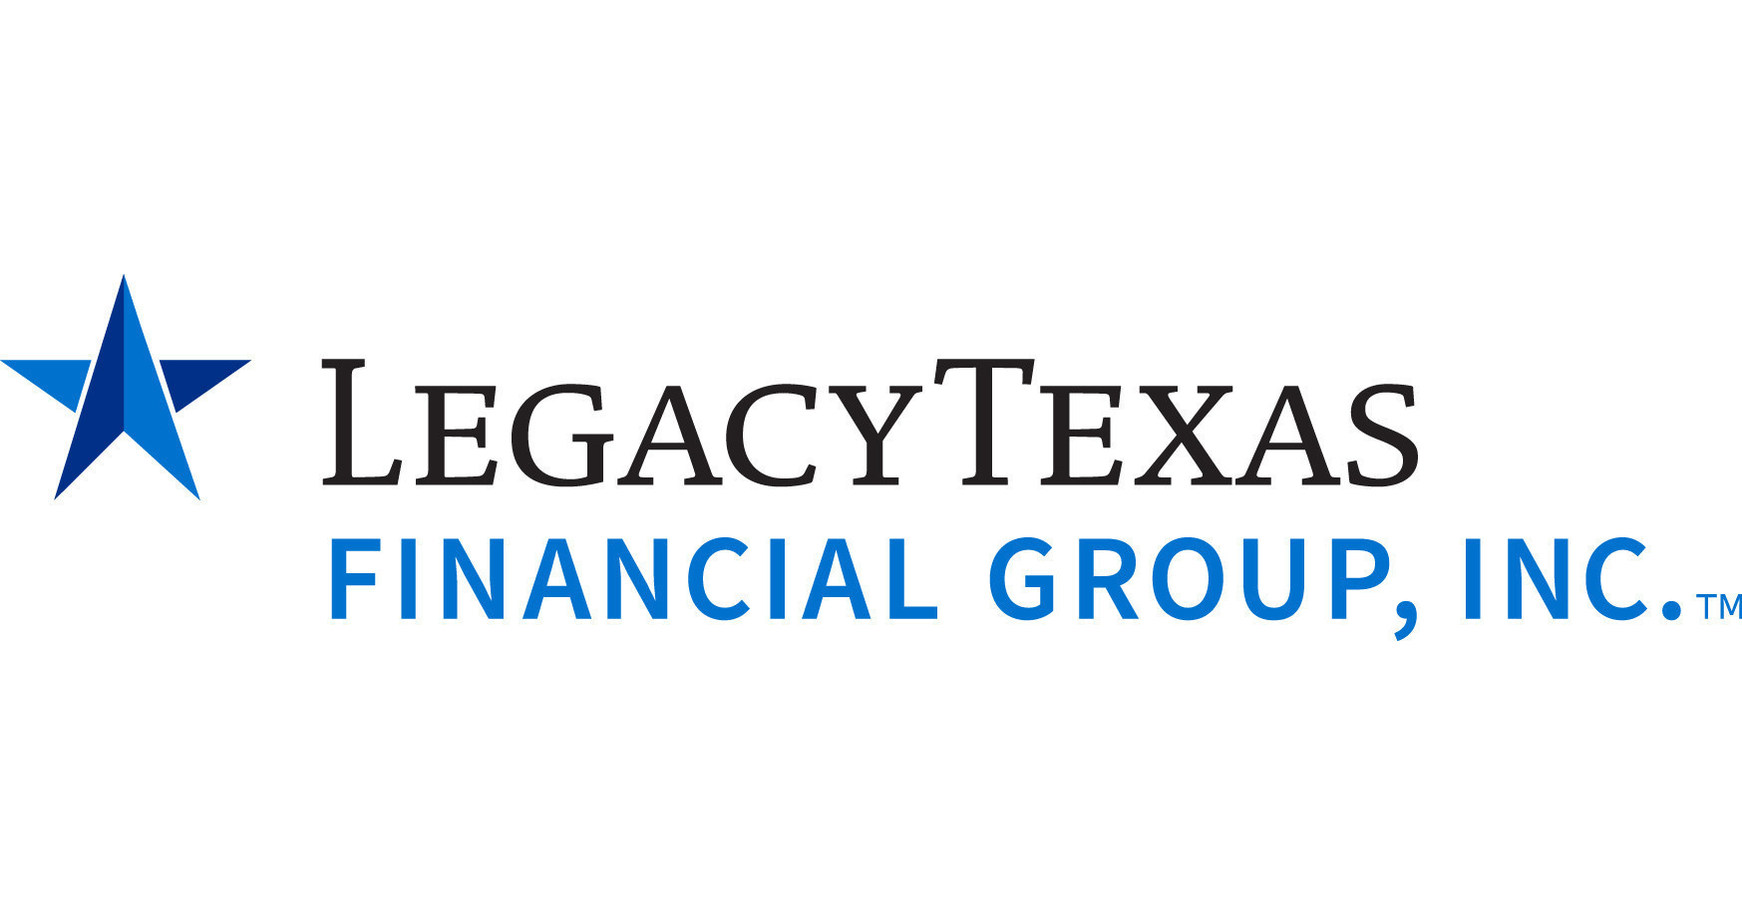 LegacyTexas Financial Group, Inc.